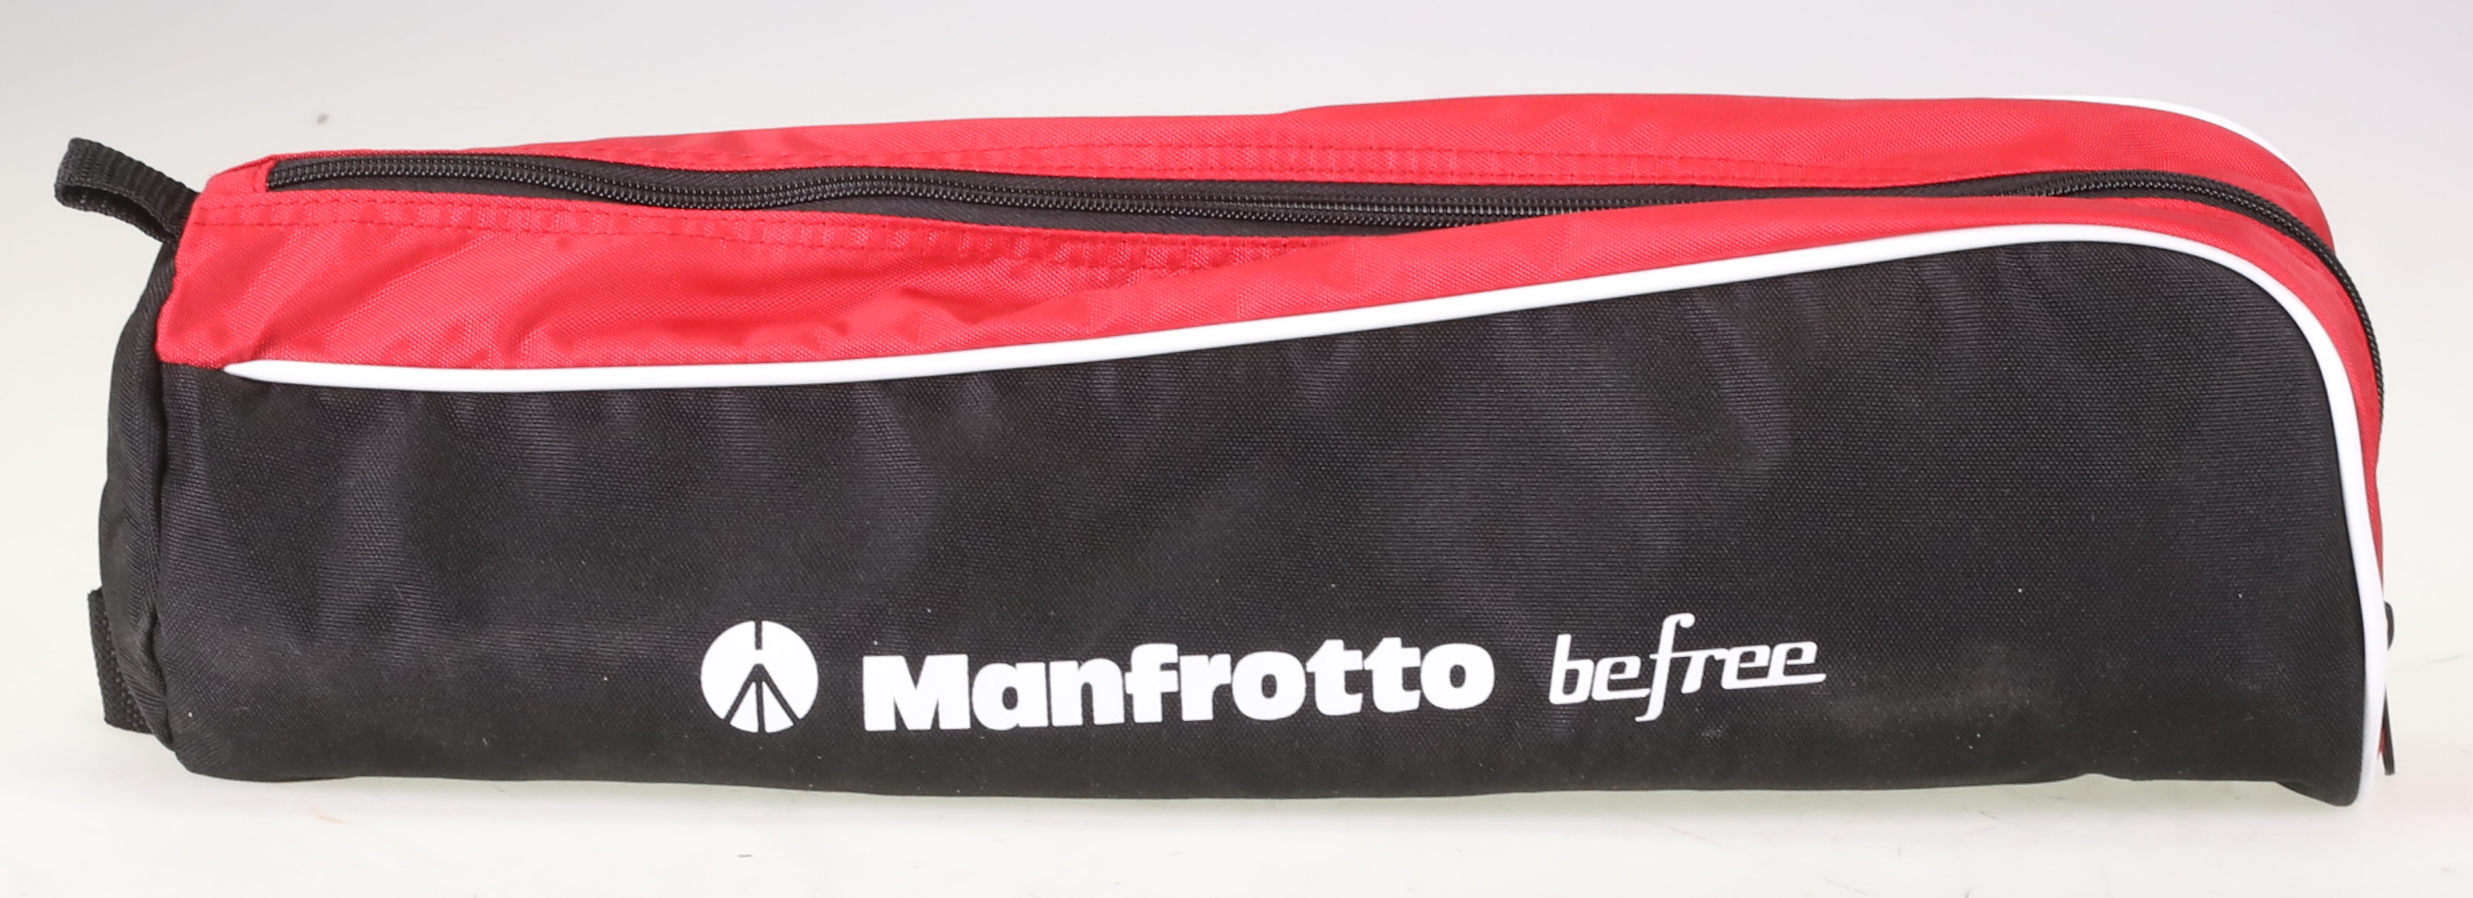 Manfrotto Befree Advanced Aluminium Lever Tripod with Ball Head occasion